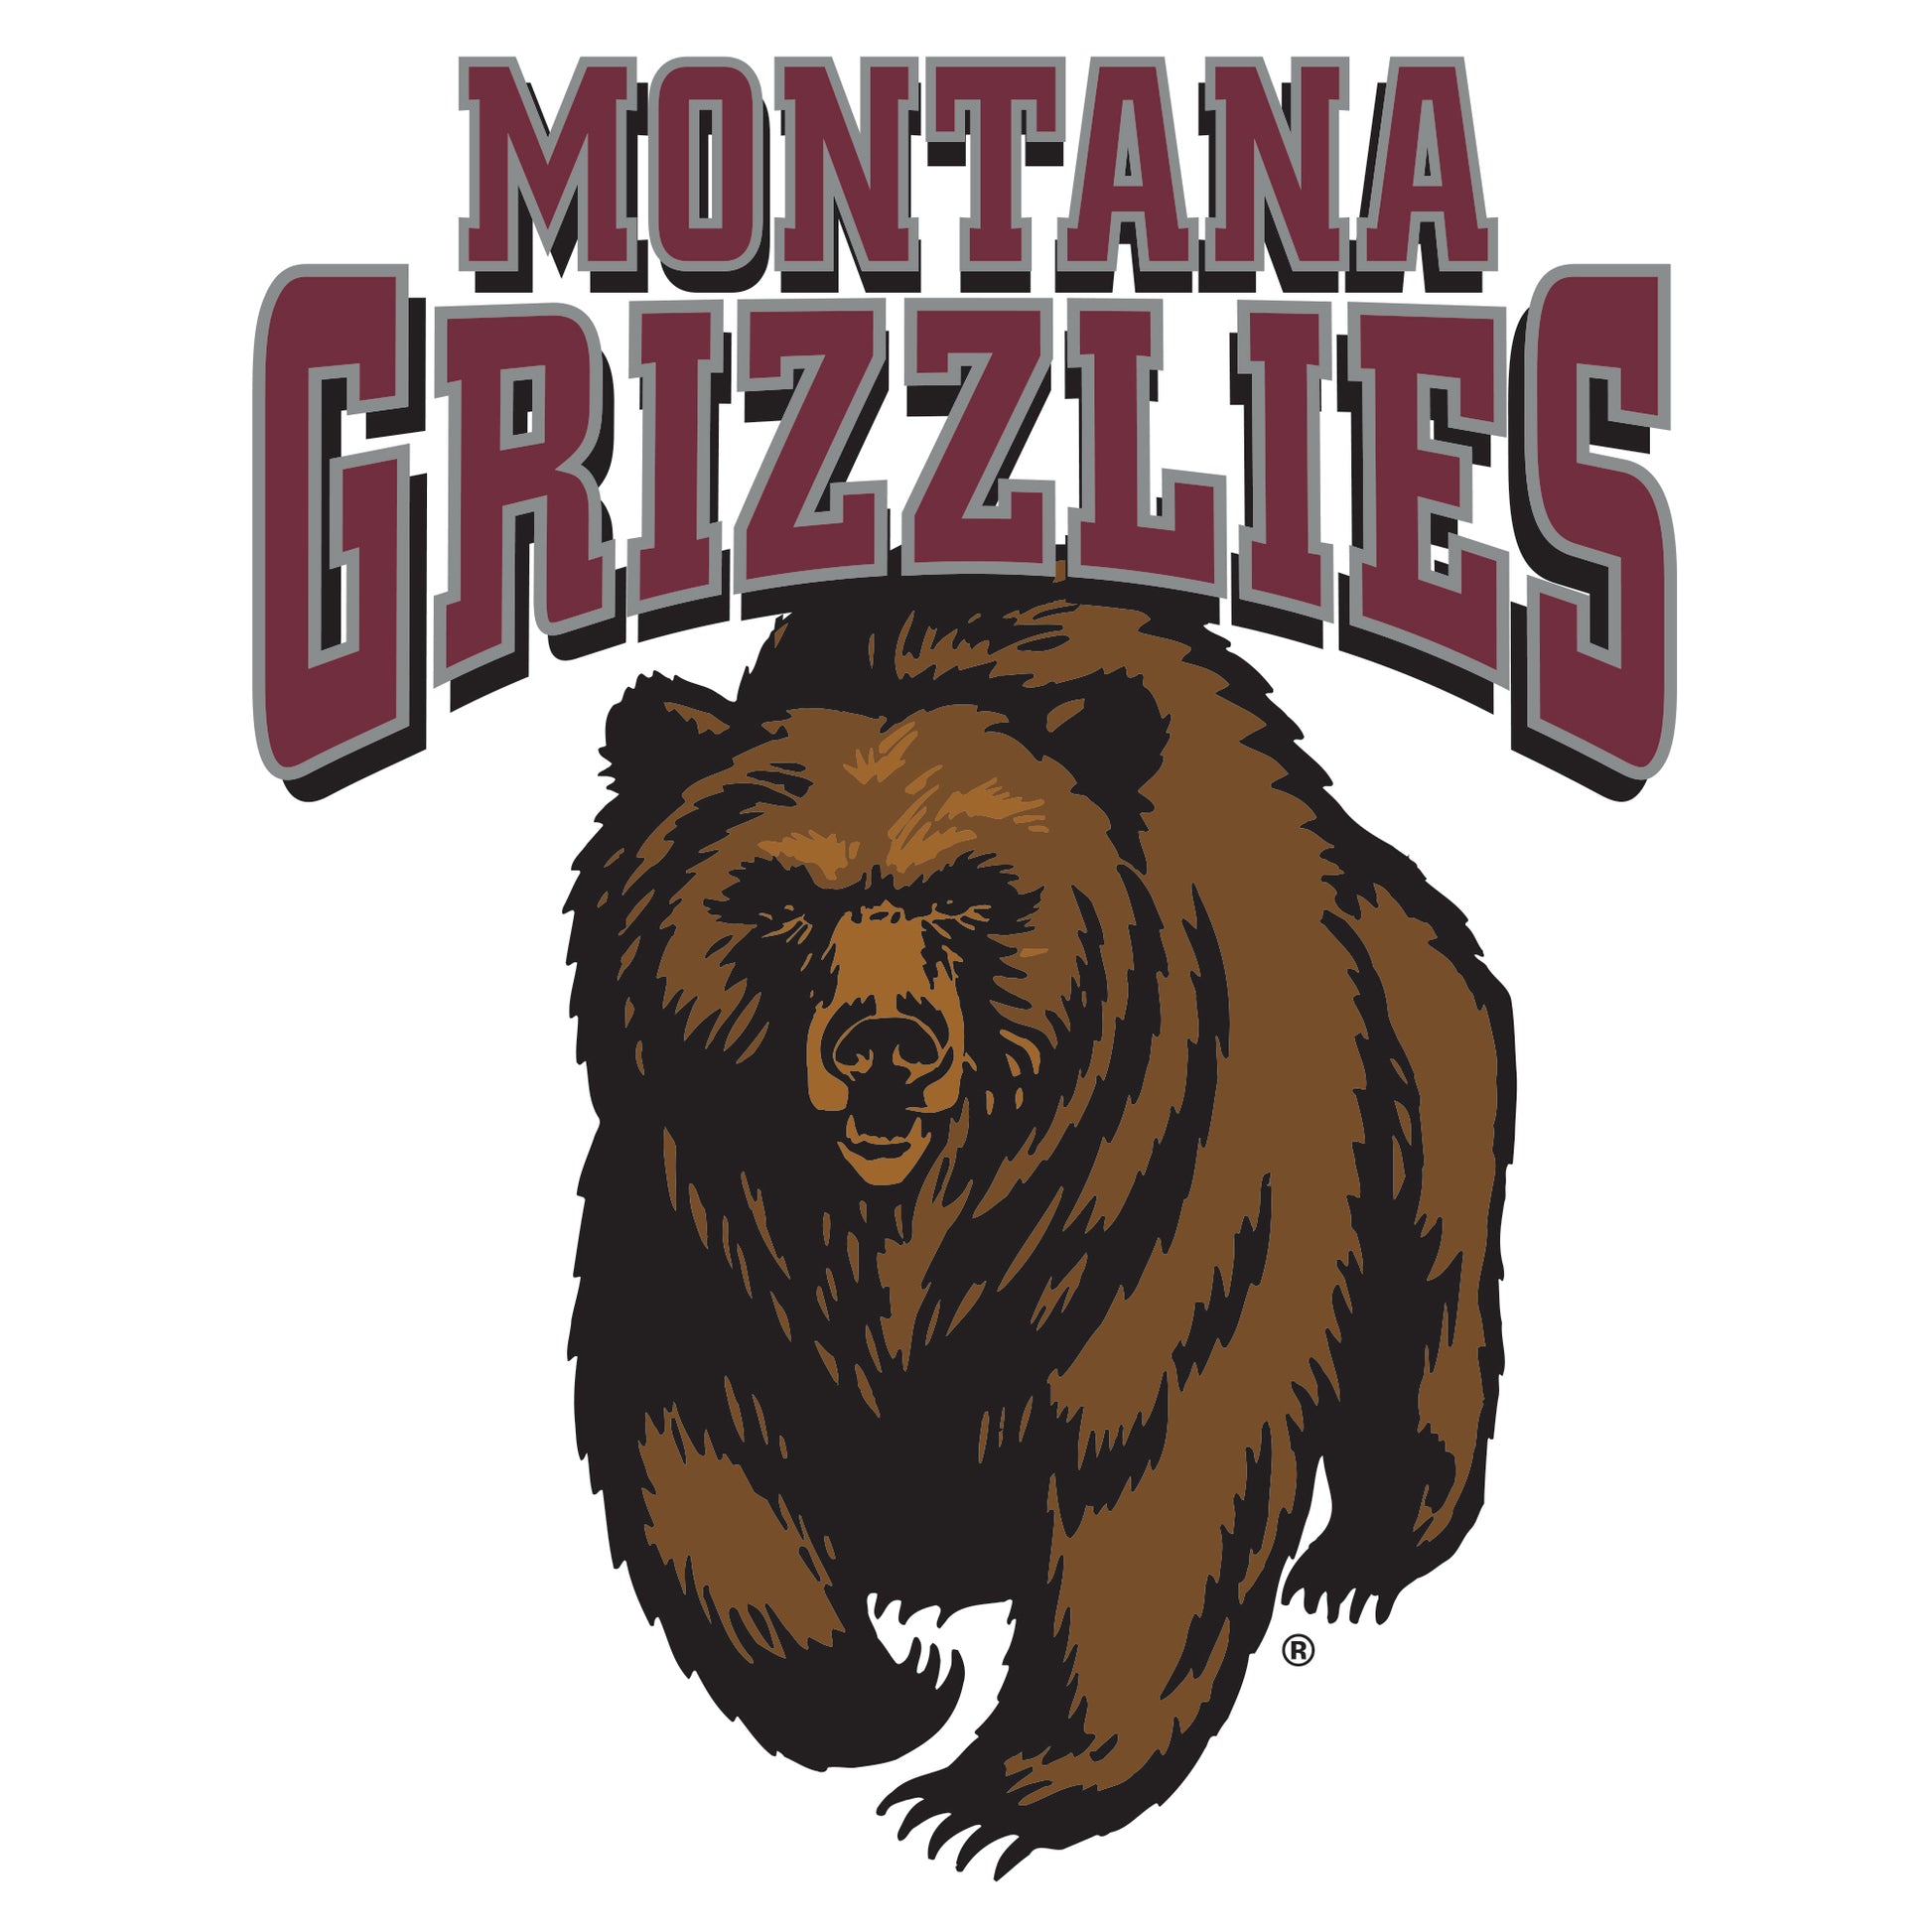 Grizz! - Memphis Grizzlies Mascot - Sticker